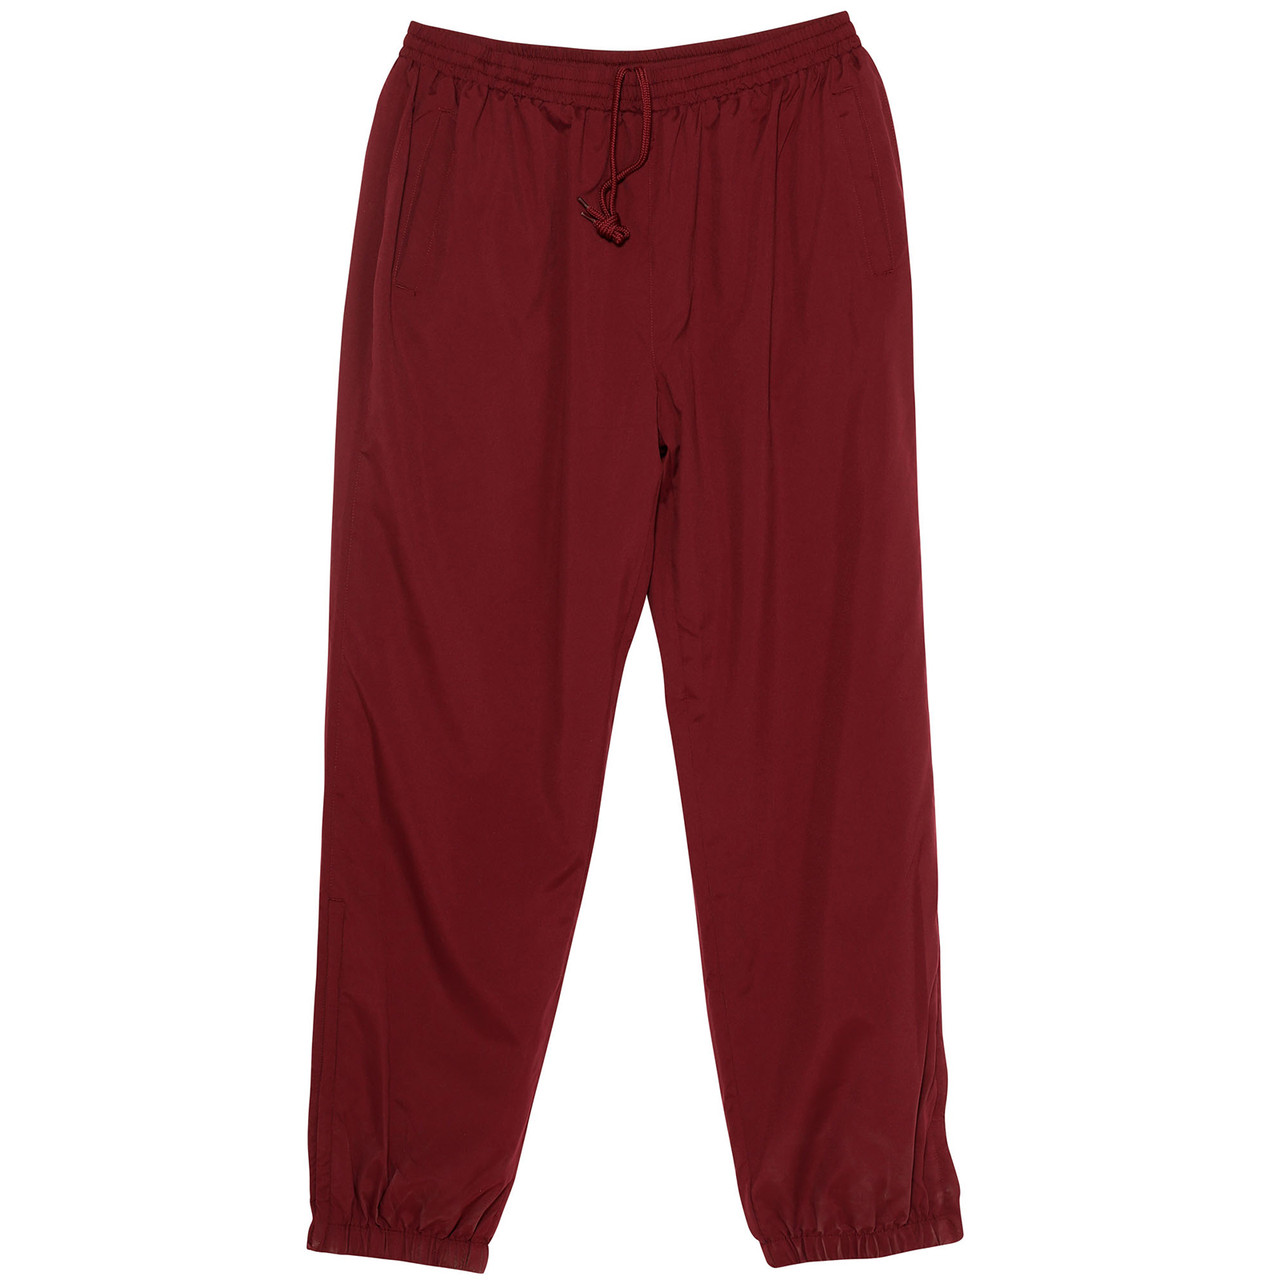 Unisex Polyester Warm Up Track Pants | Shop Blank Sports Wear Online